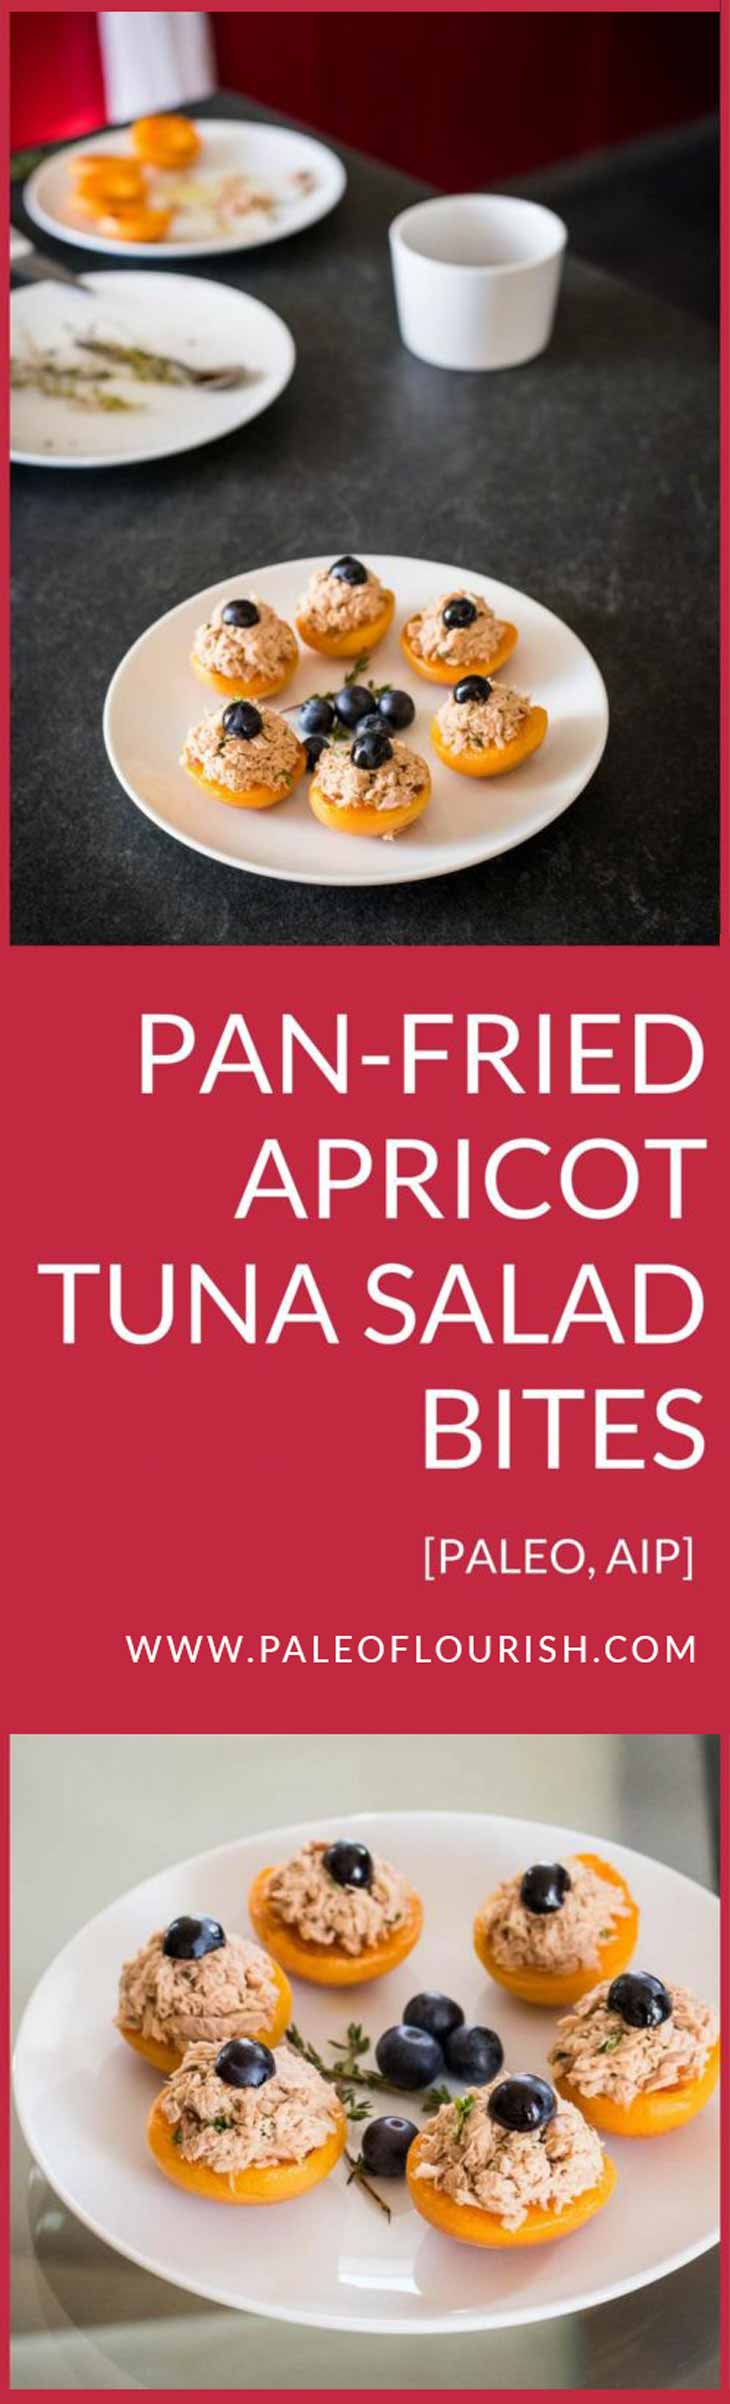 Pan-Fried Apricot Tuna Salad Bites Recipe #paleo #aip #recipes - https://paleoflourish.com/pan-fried-apricot-tuna-salad-bites-recipe